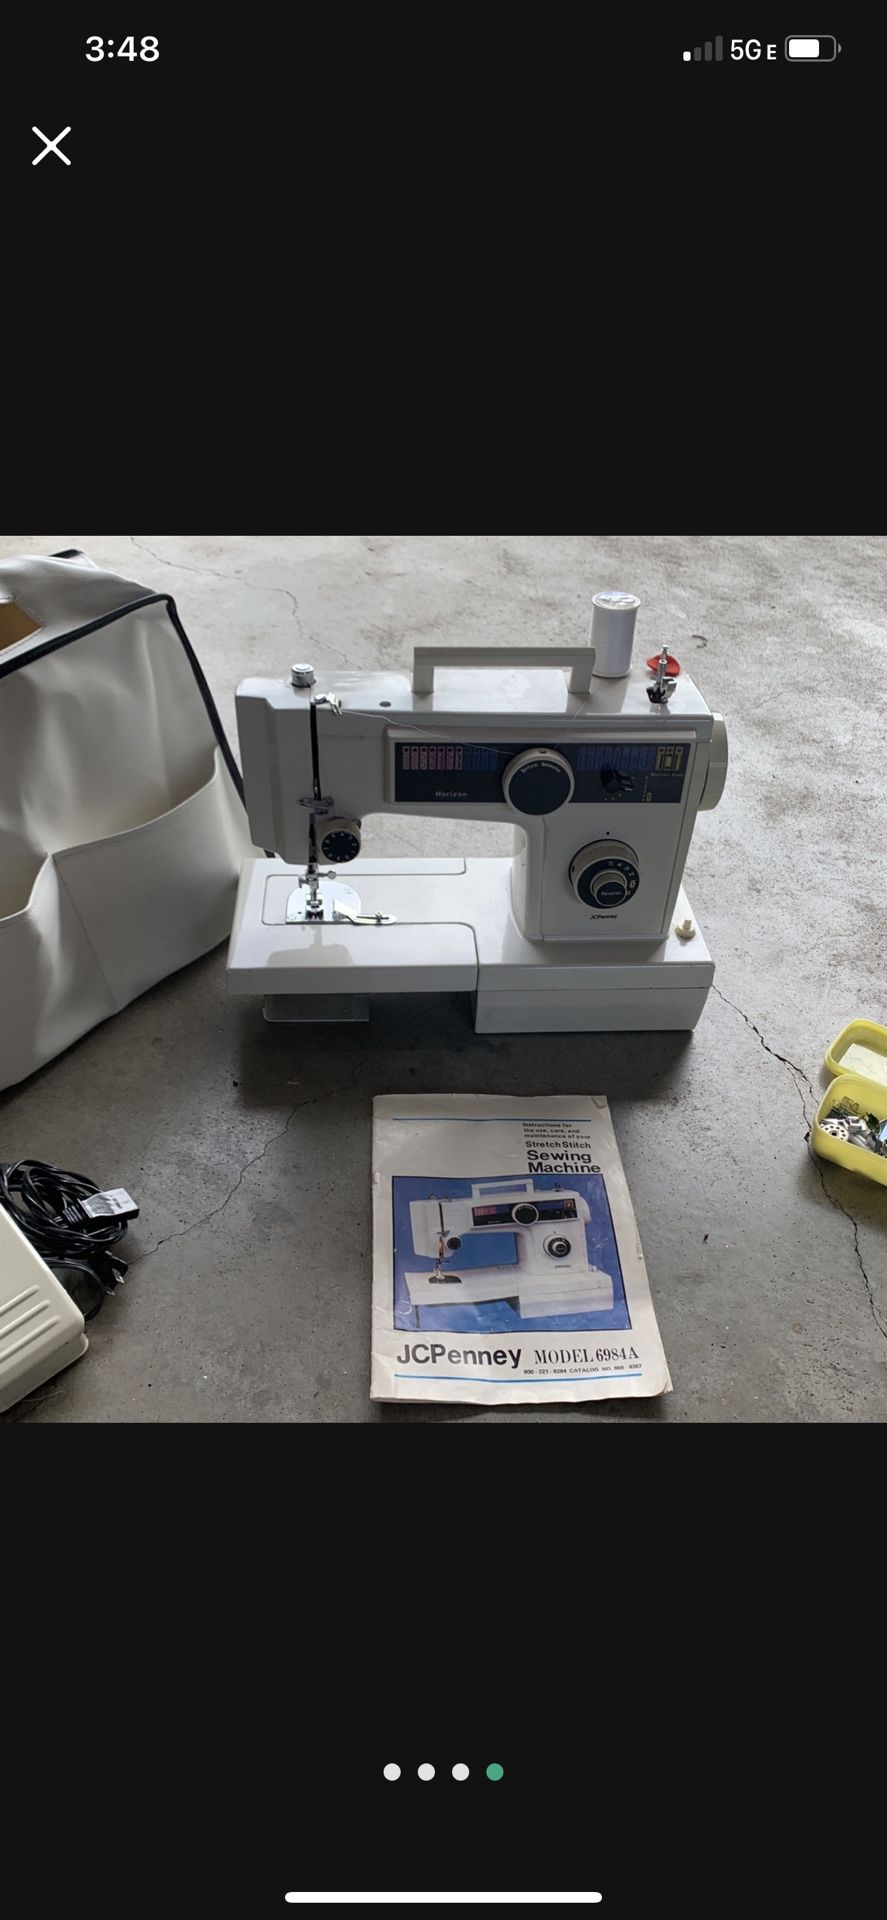 Jcpenny Stretch stitch sewing Machine